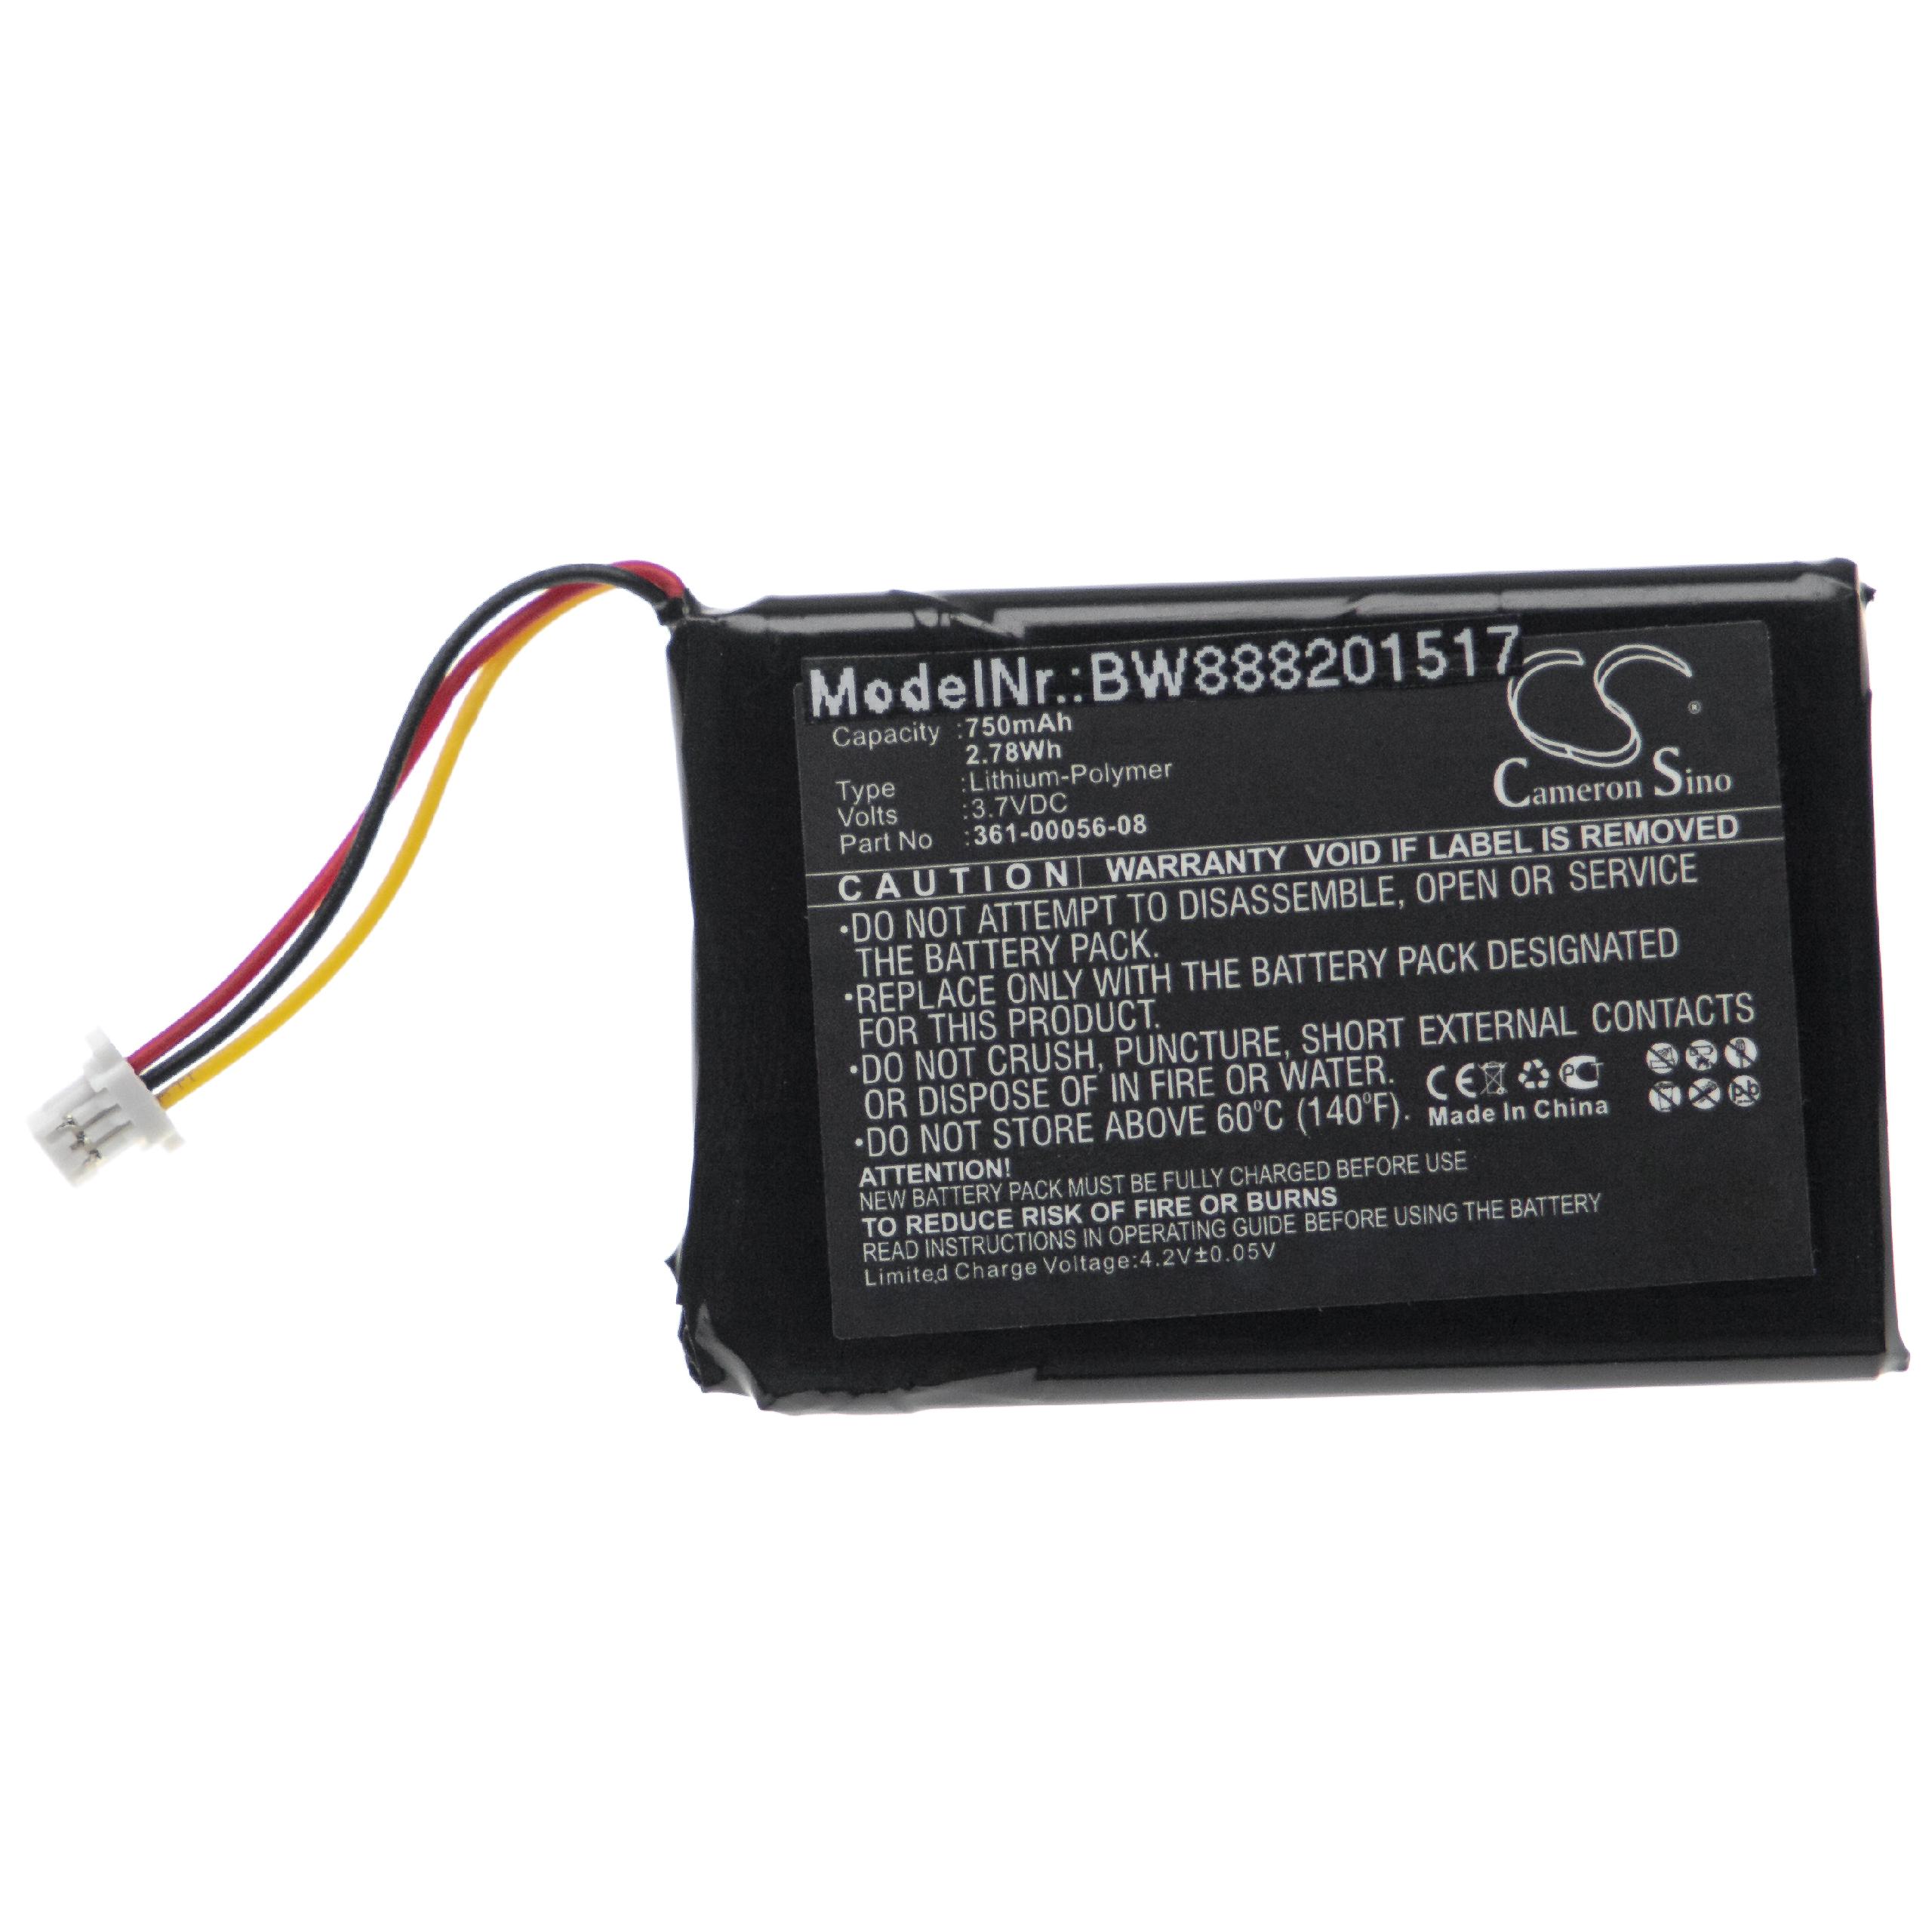 Batterie remplace Garmin 361-00045-00, 1ICP5/34/45, 1ICP4/34/5 pour navigation GPS - 750mAh 4,2V Li-polymère